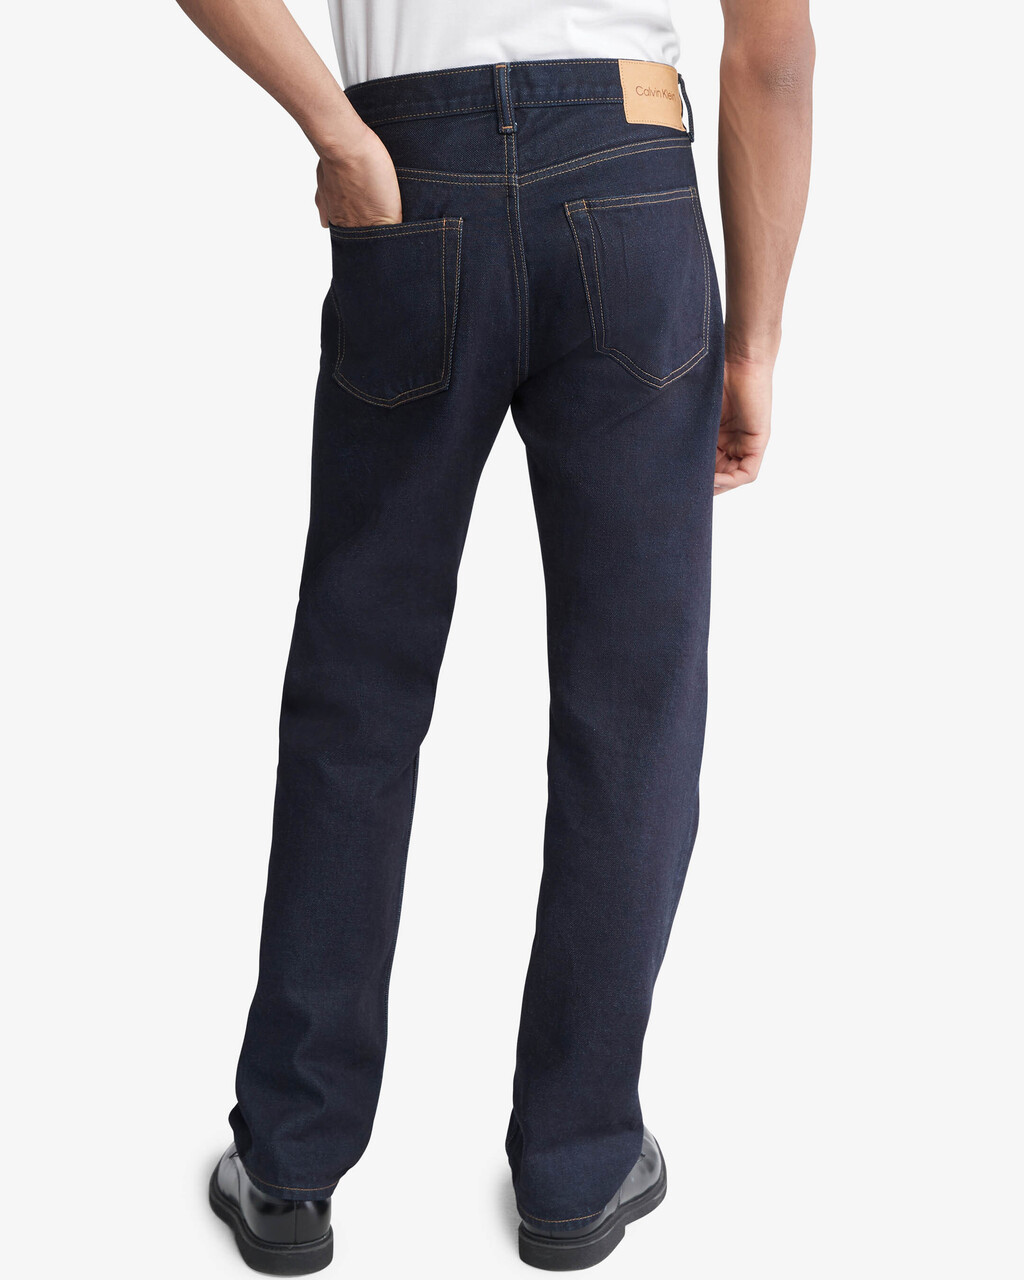 Standard Straight Ck Selvedge Jeans, CK RAW SELVEDGE, hi-res